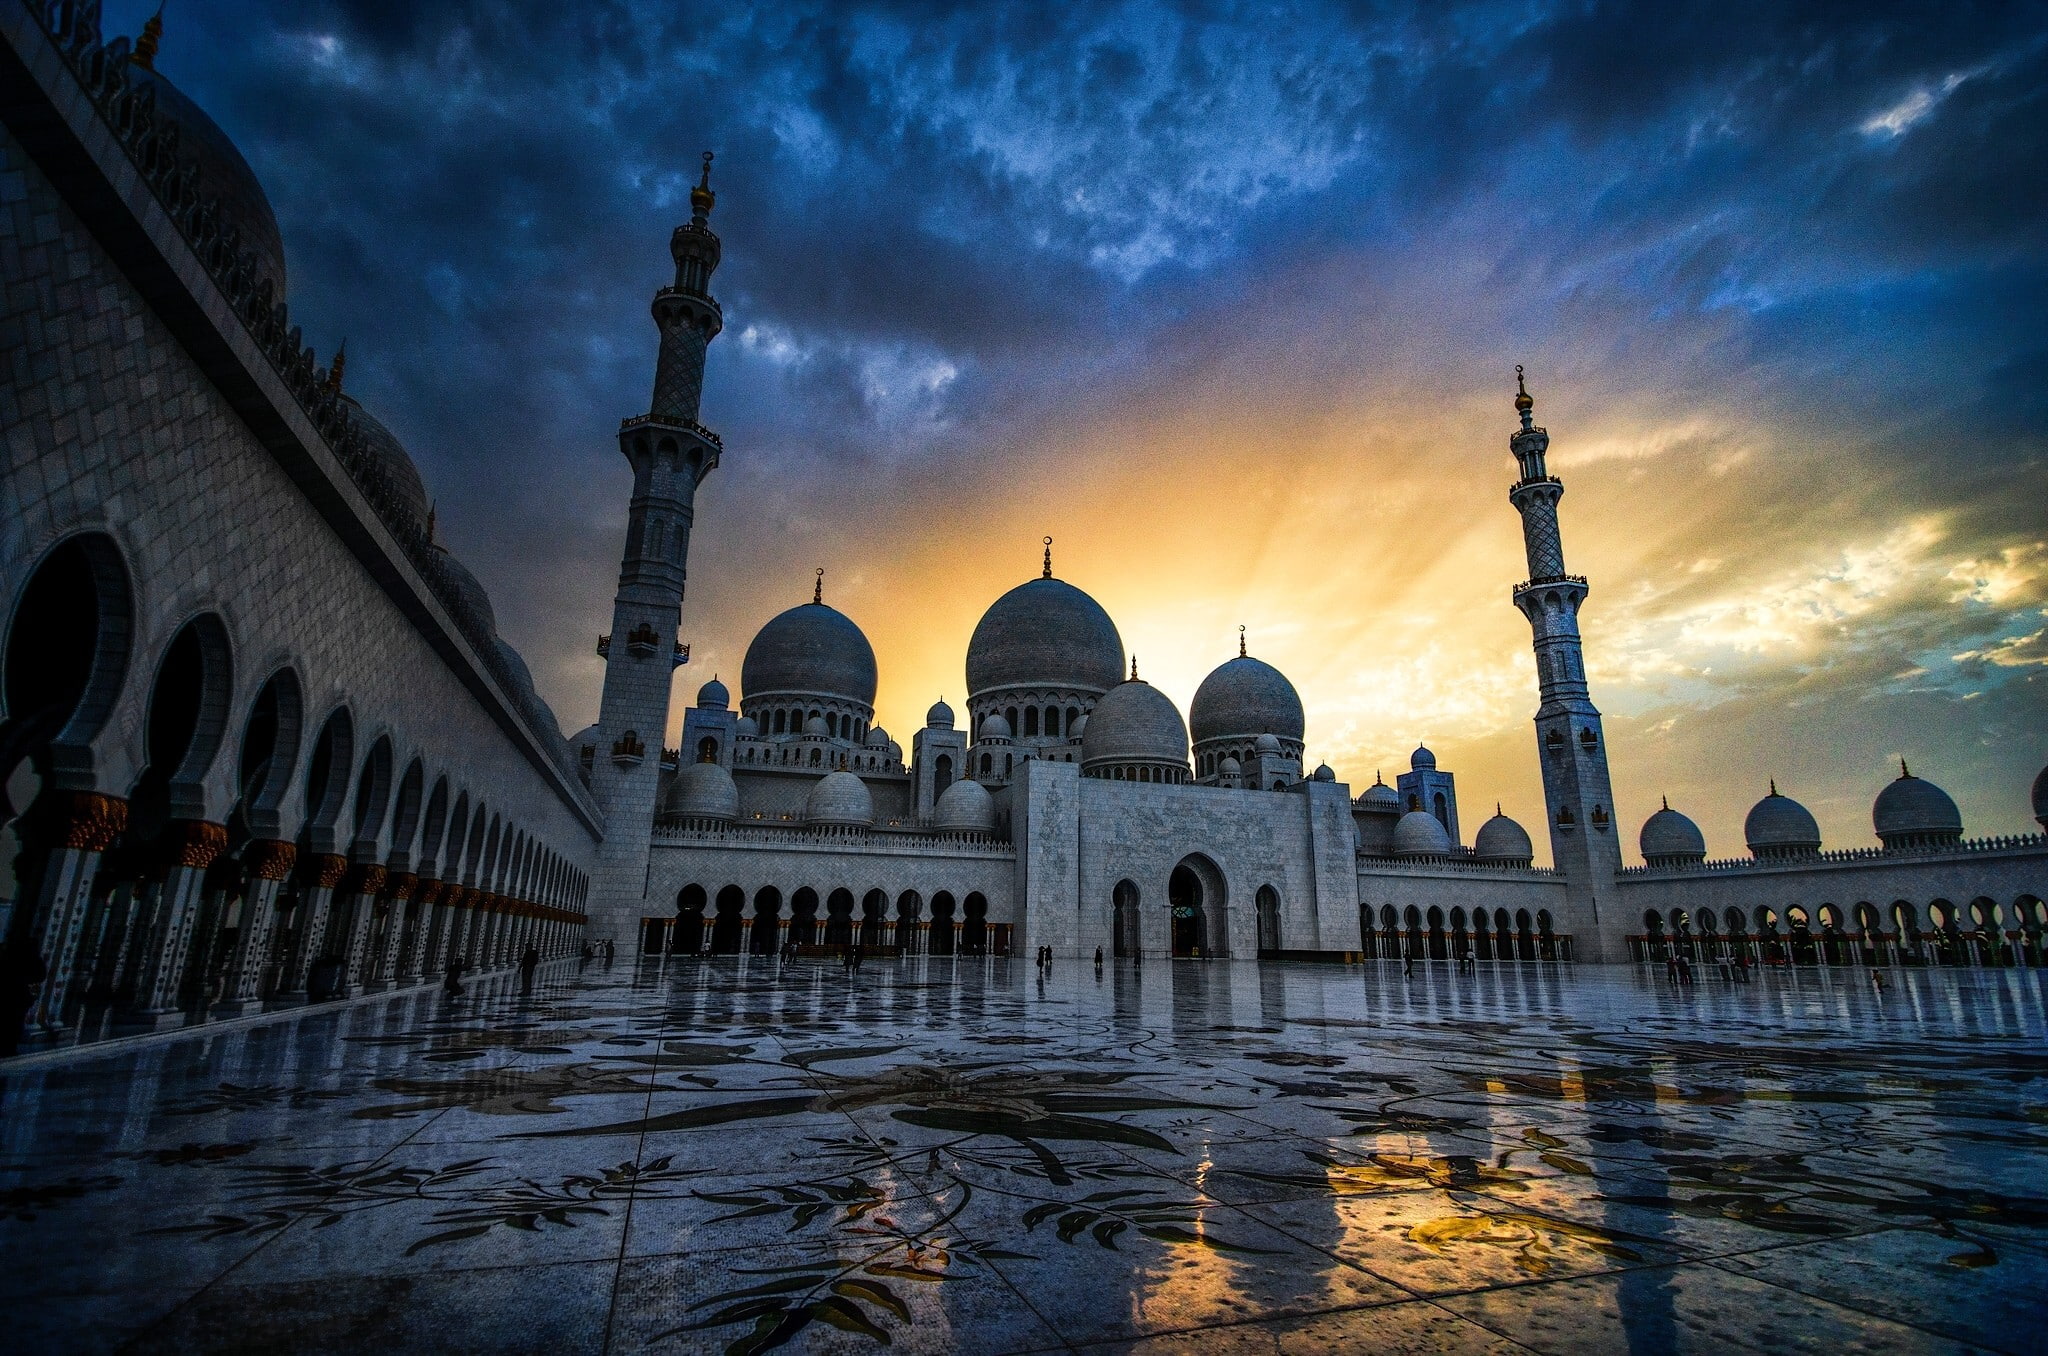 Sheikh Zayed Grand Mosque, Abu Dhabi, UAE, United Arab Emirates